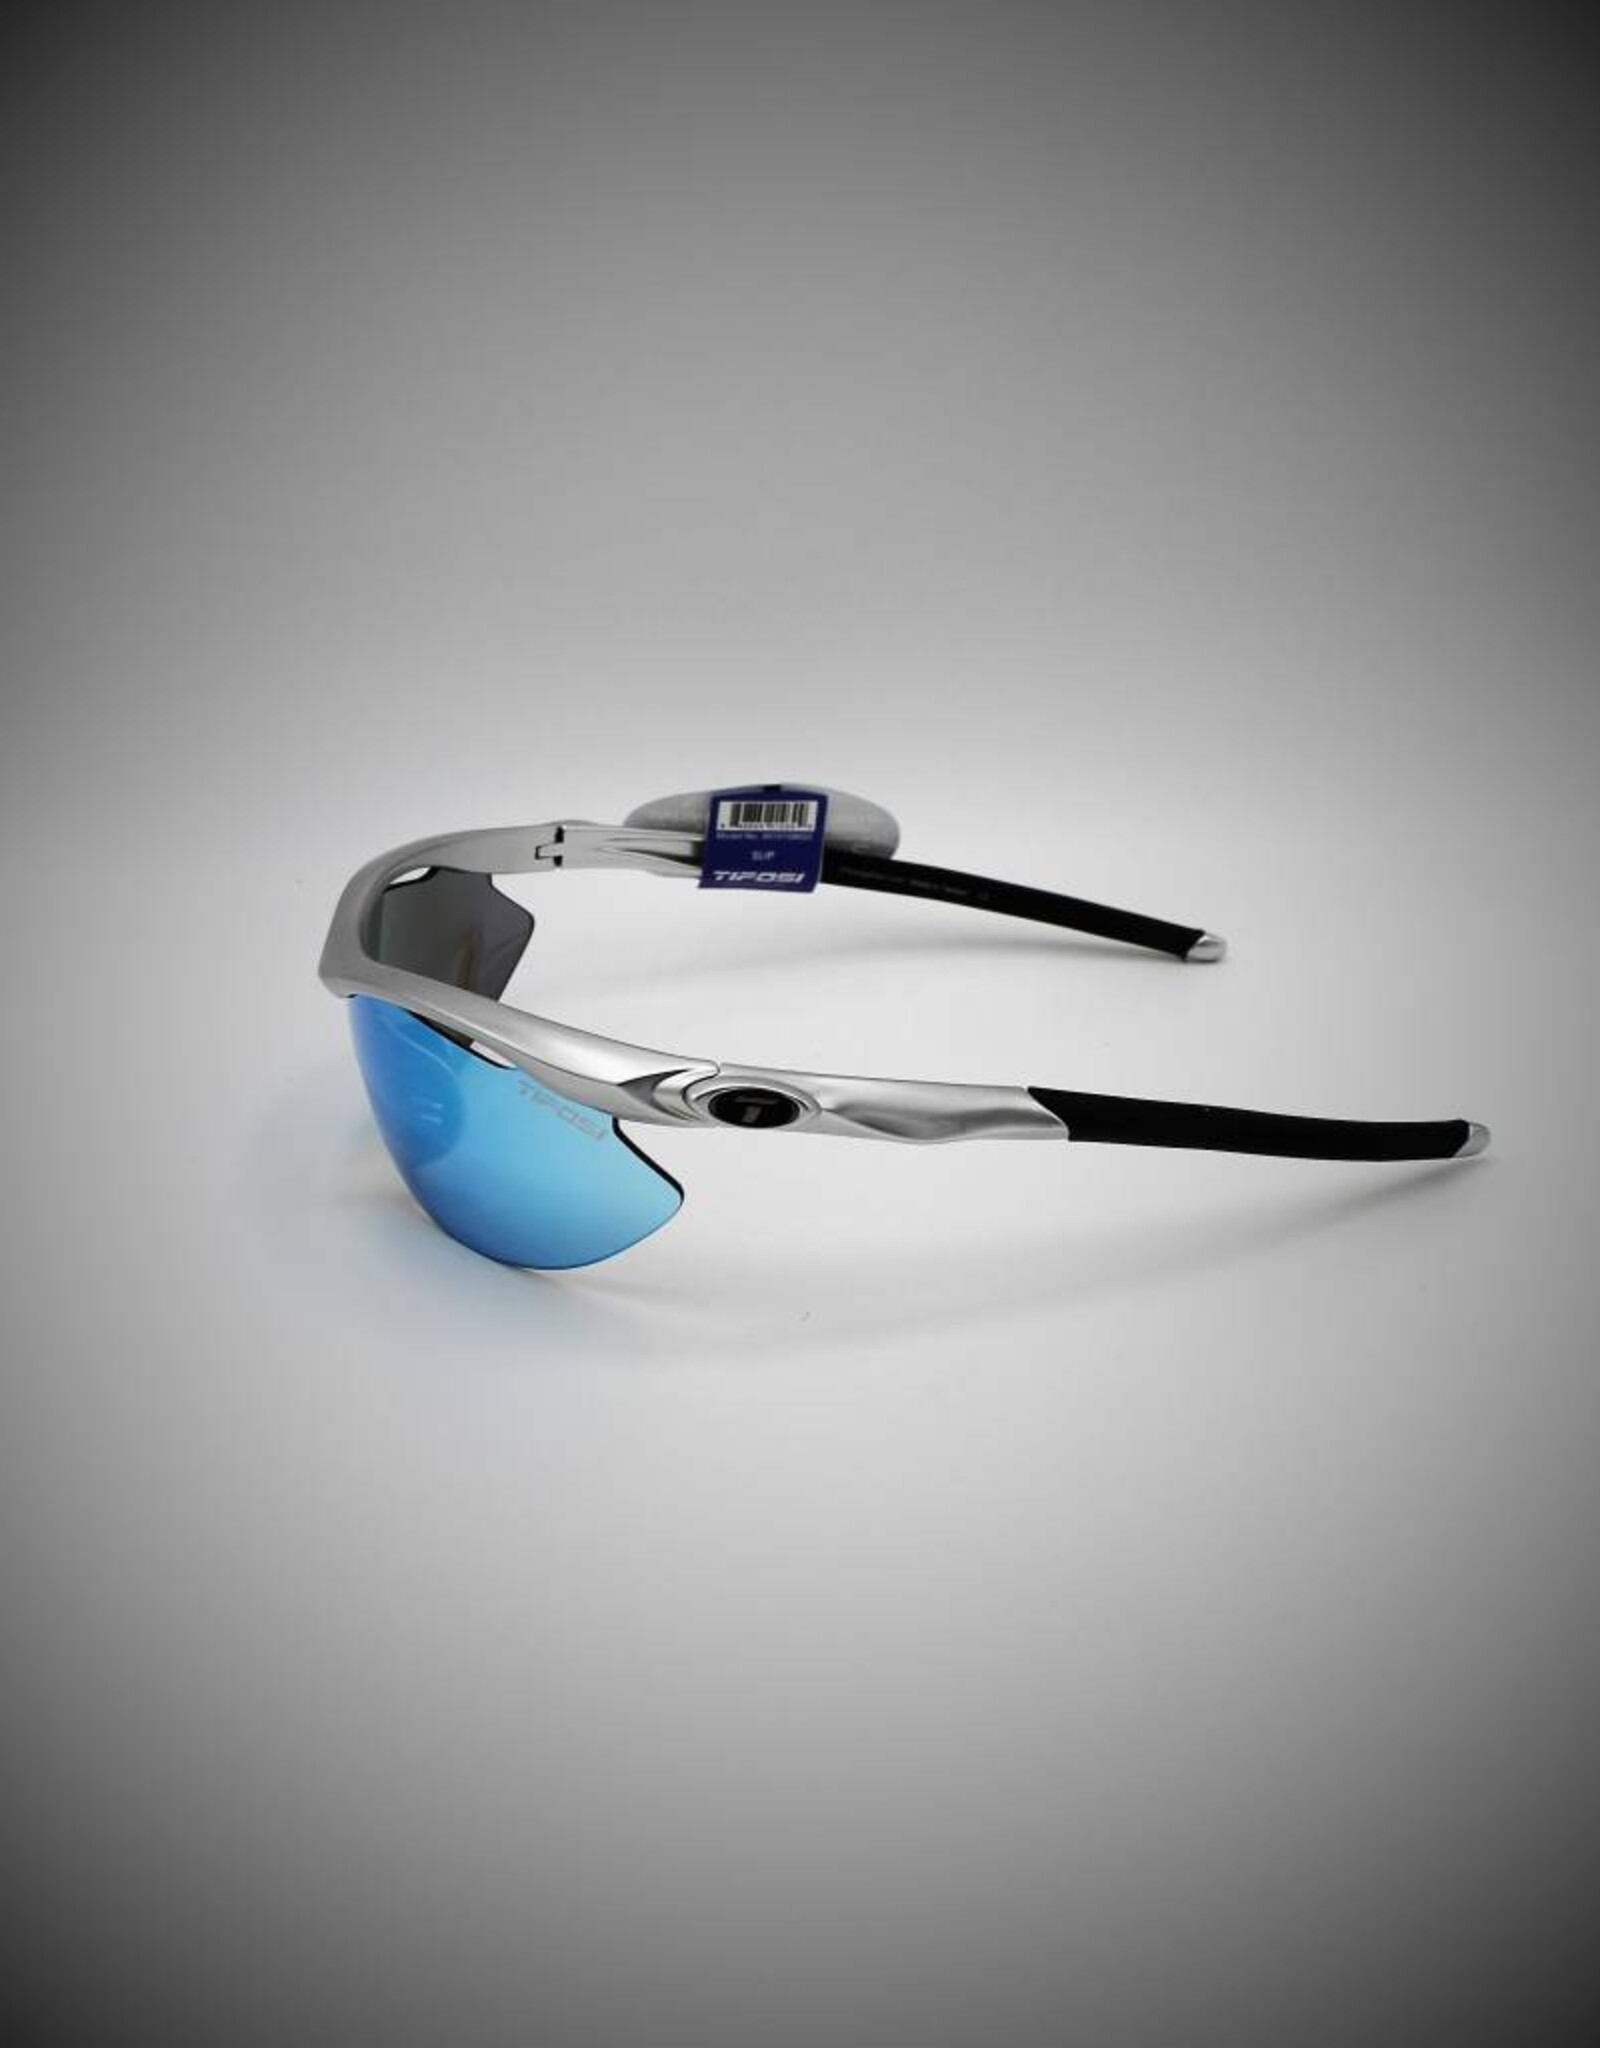 Tifosi Optics Slip, Steel Interchangeable Sunglasses